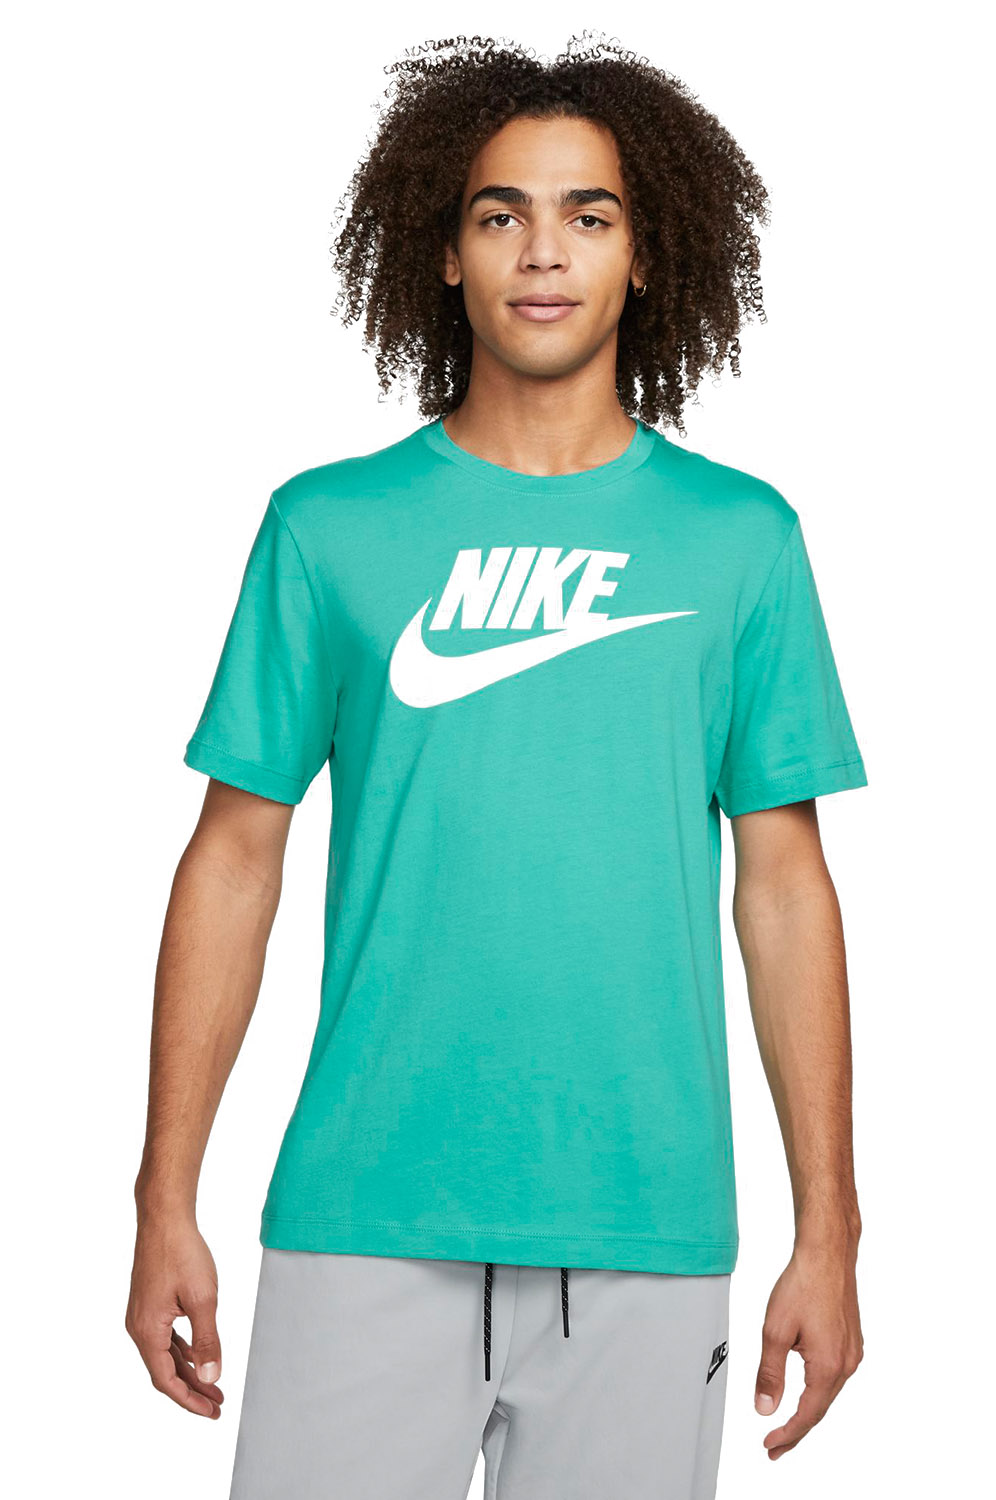 Nike T-Shirt Washed Teal White 21131